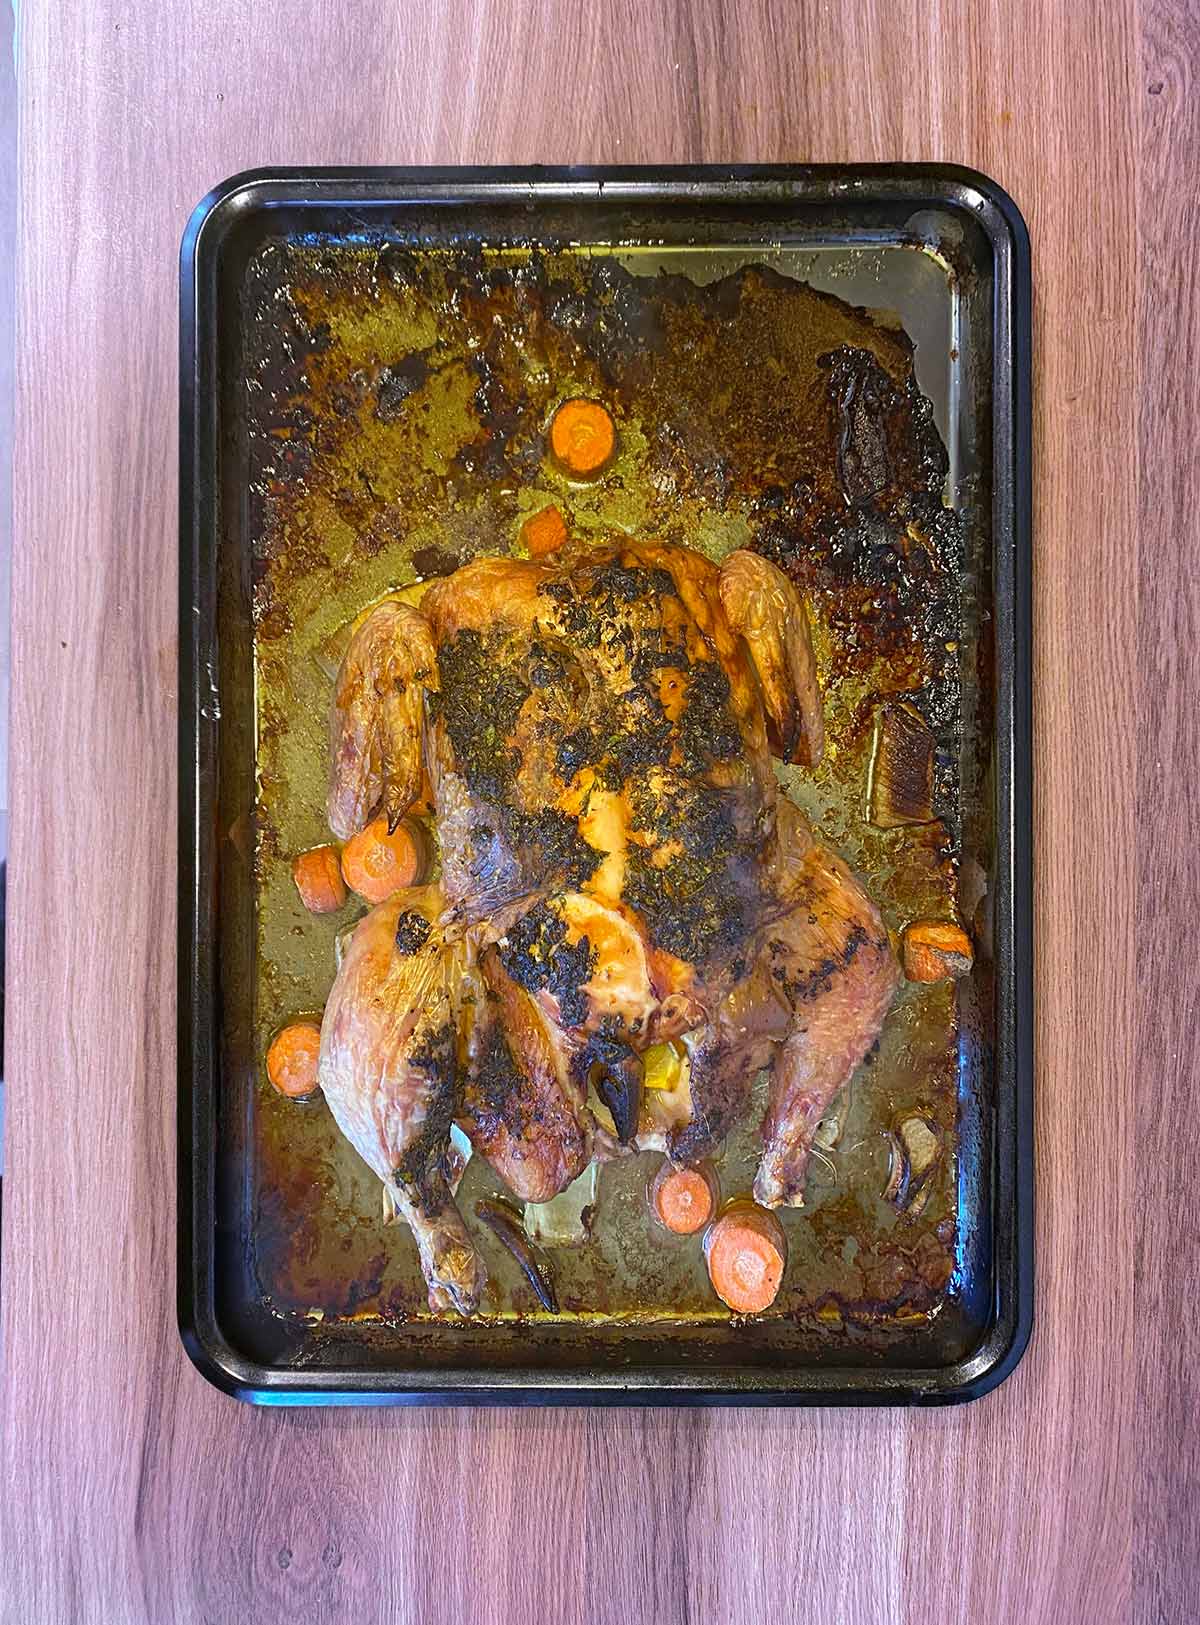 Roast chicken on a baking tray.